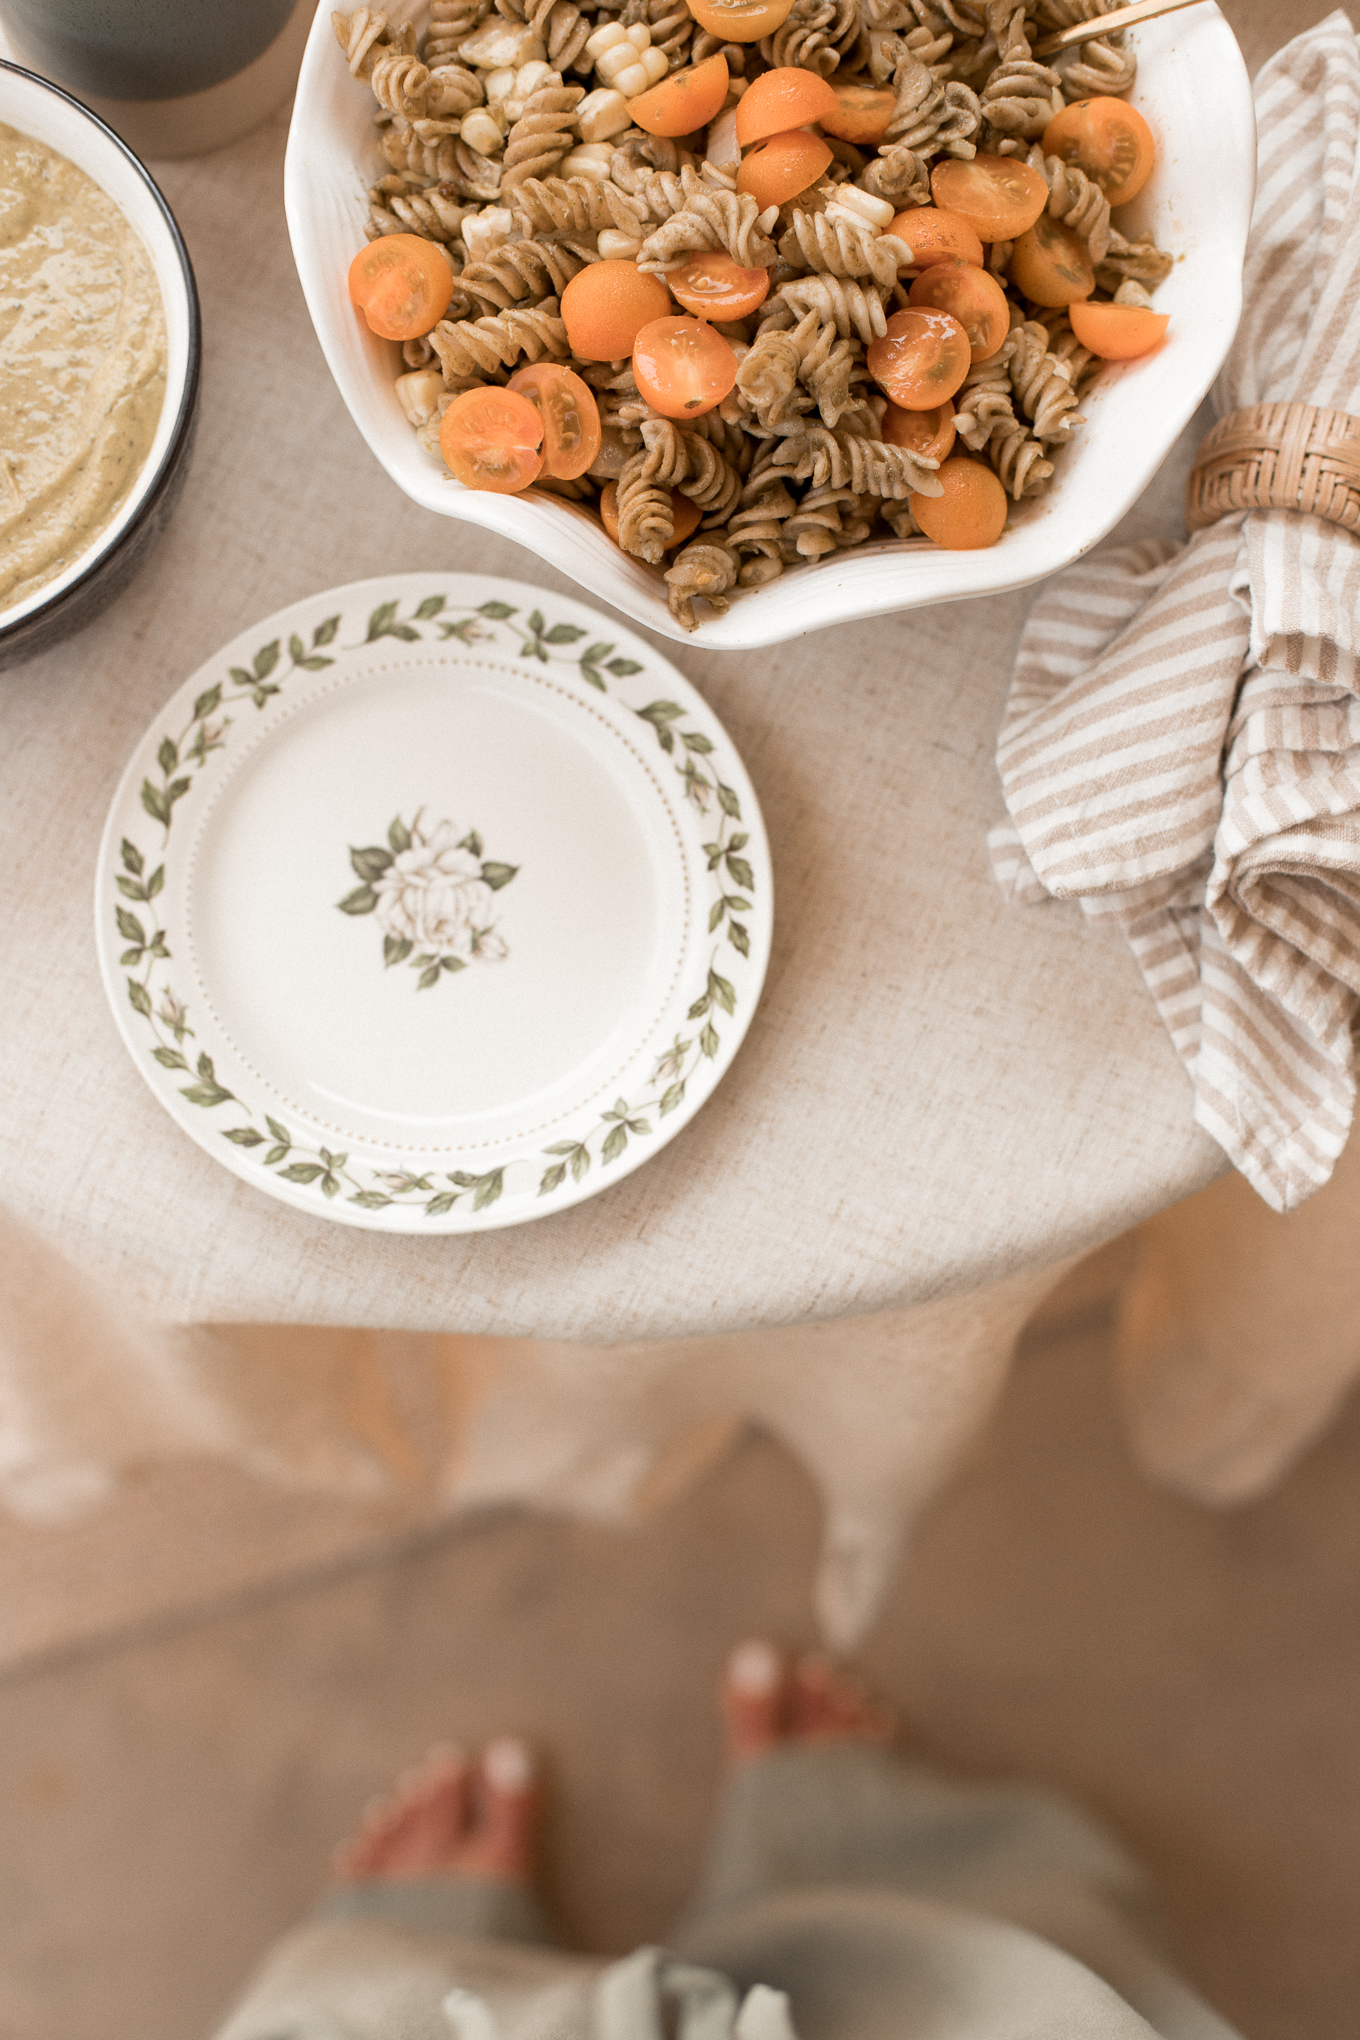 cilantro pesto pasta salad recipe | Louella Reese